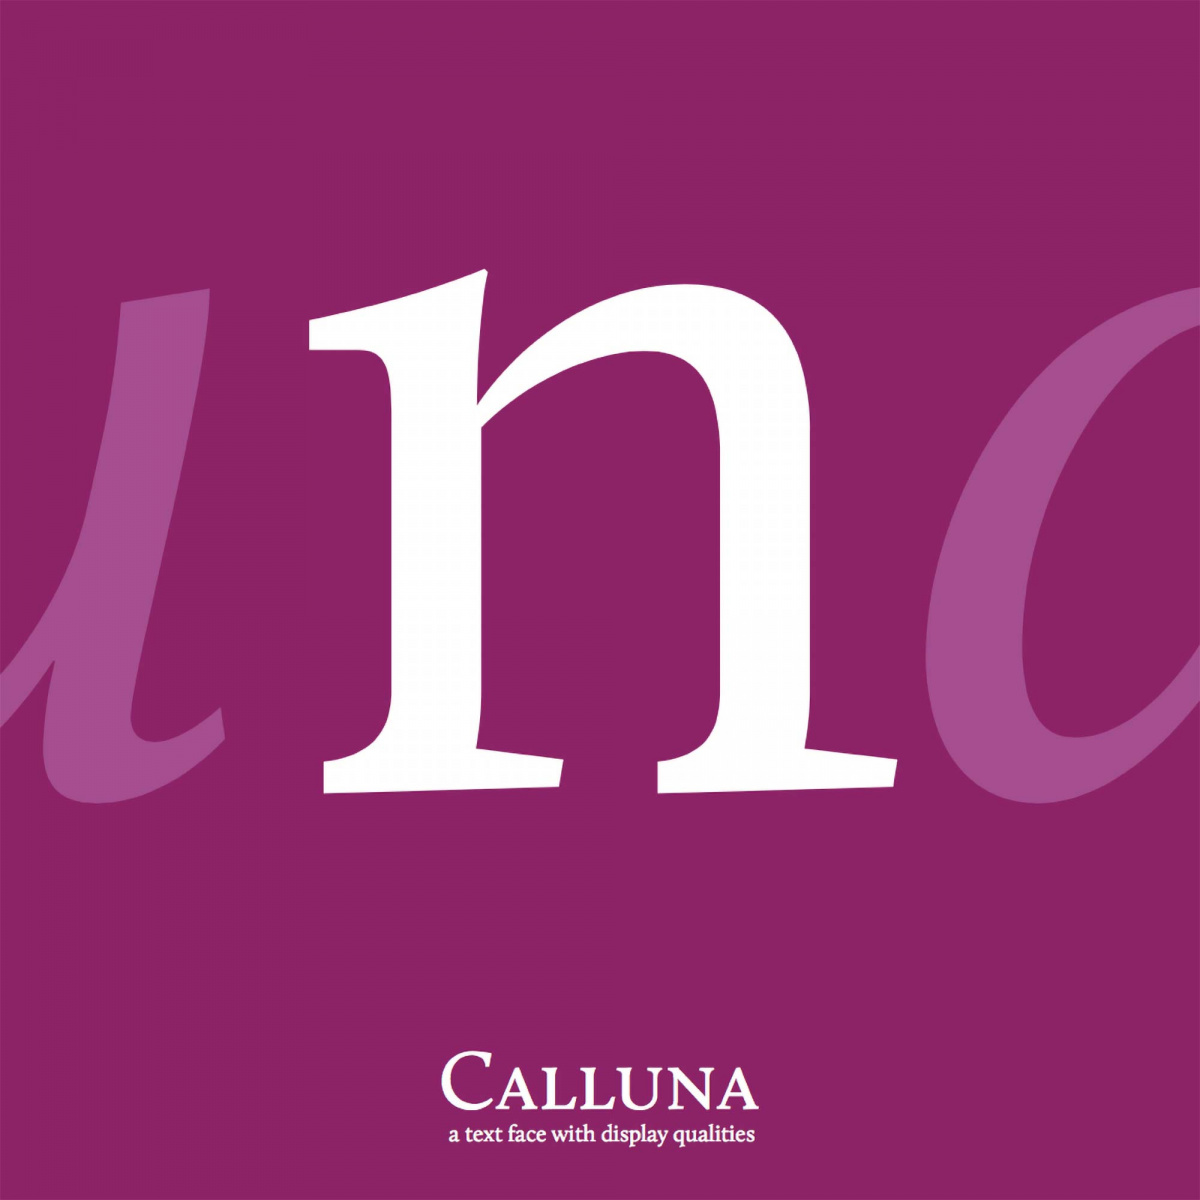 13 Jos other design Calluna3